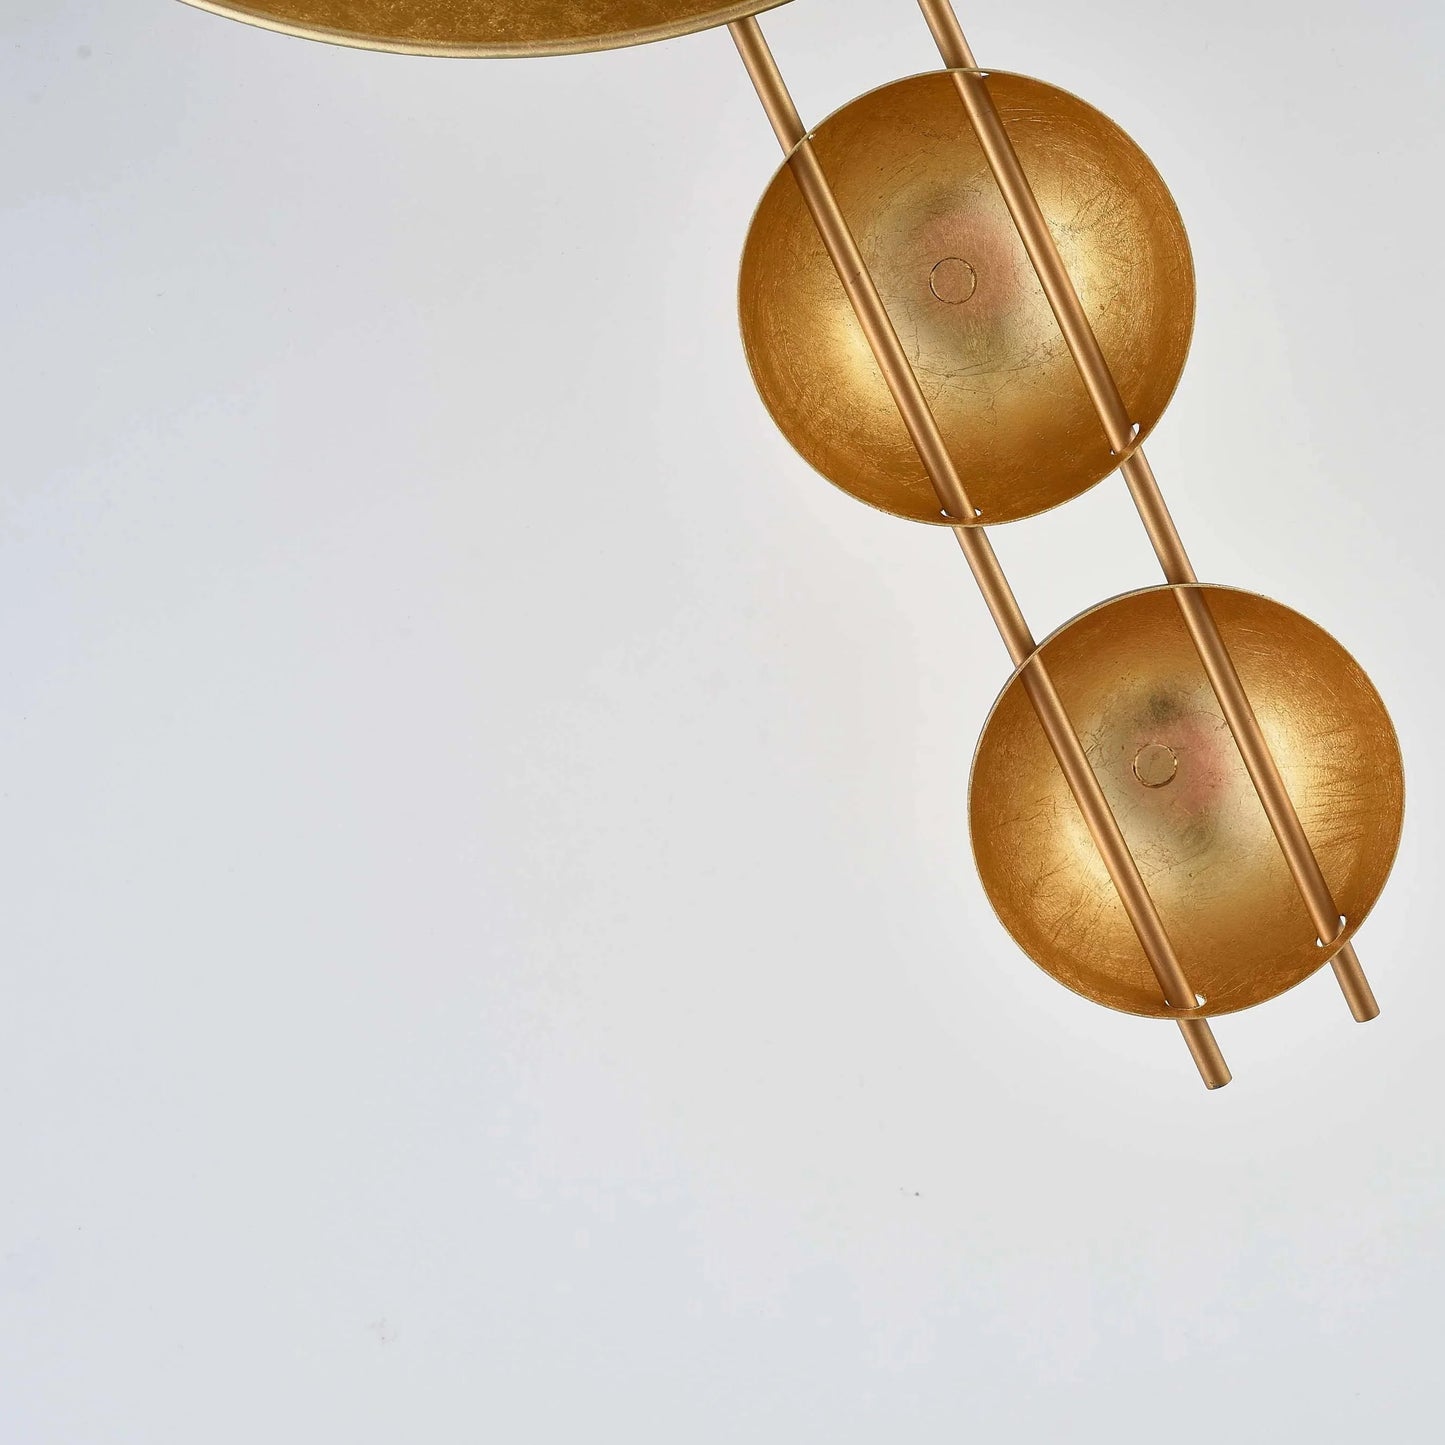 Premium Medallion Wall Sconce Led Light by Gloss (B872/350)